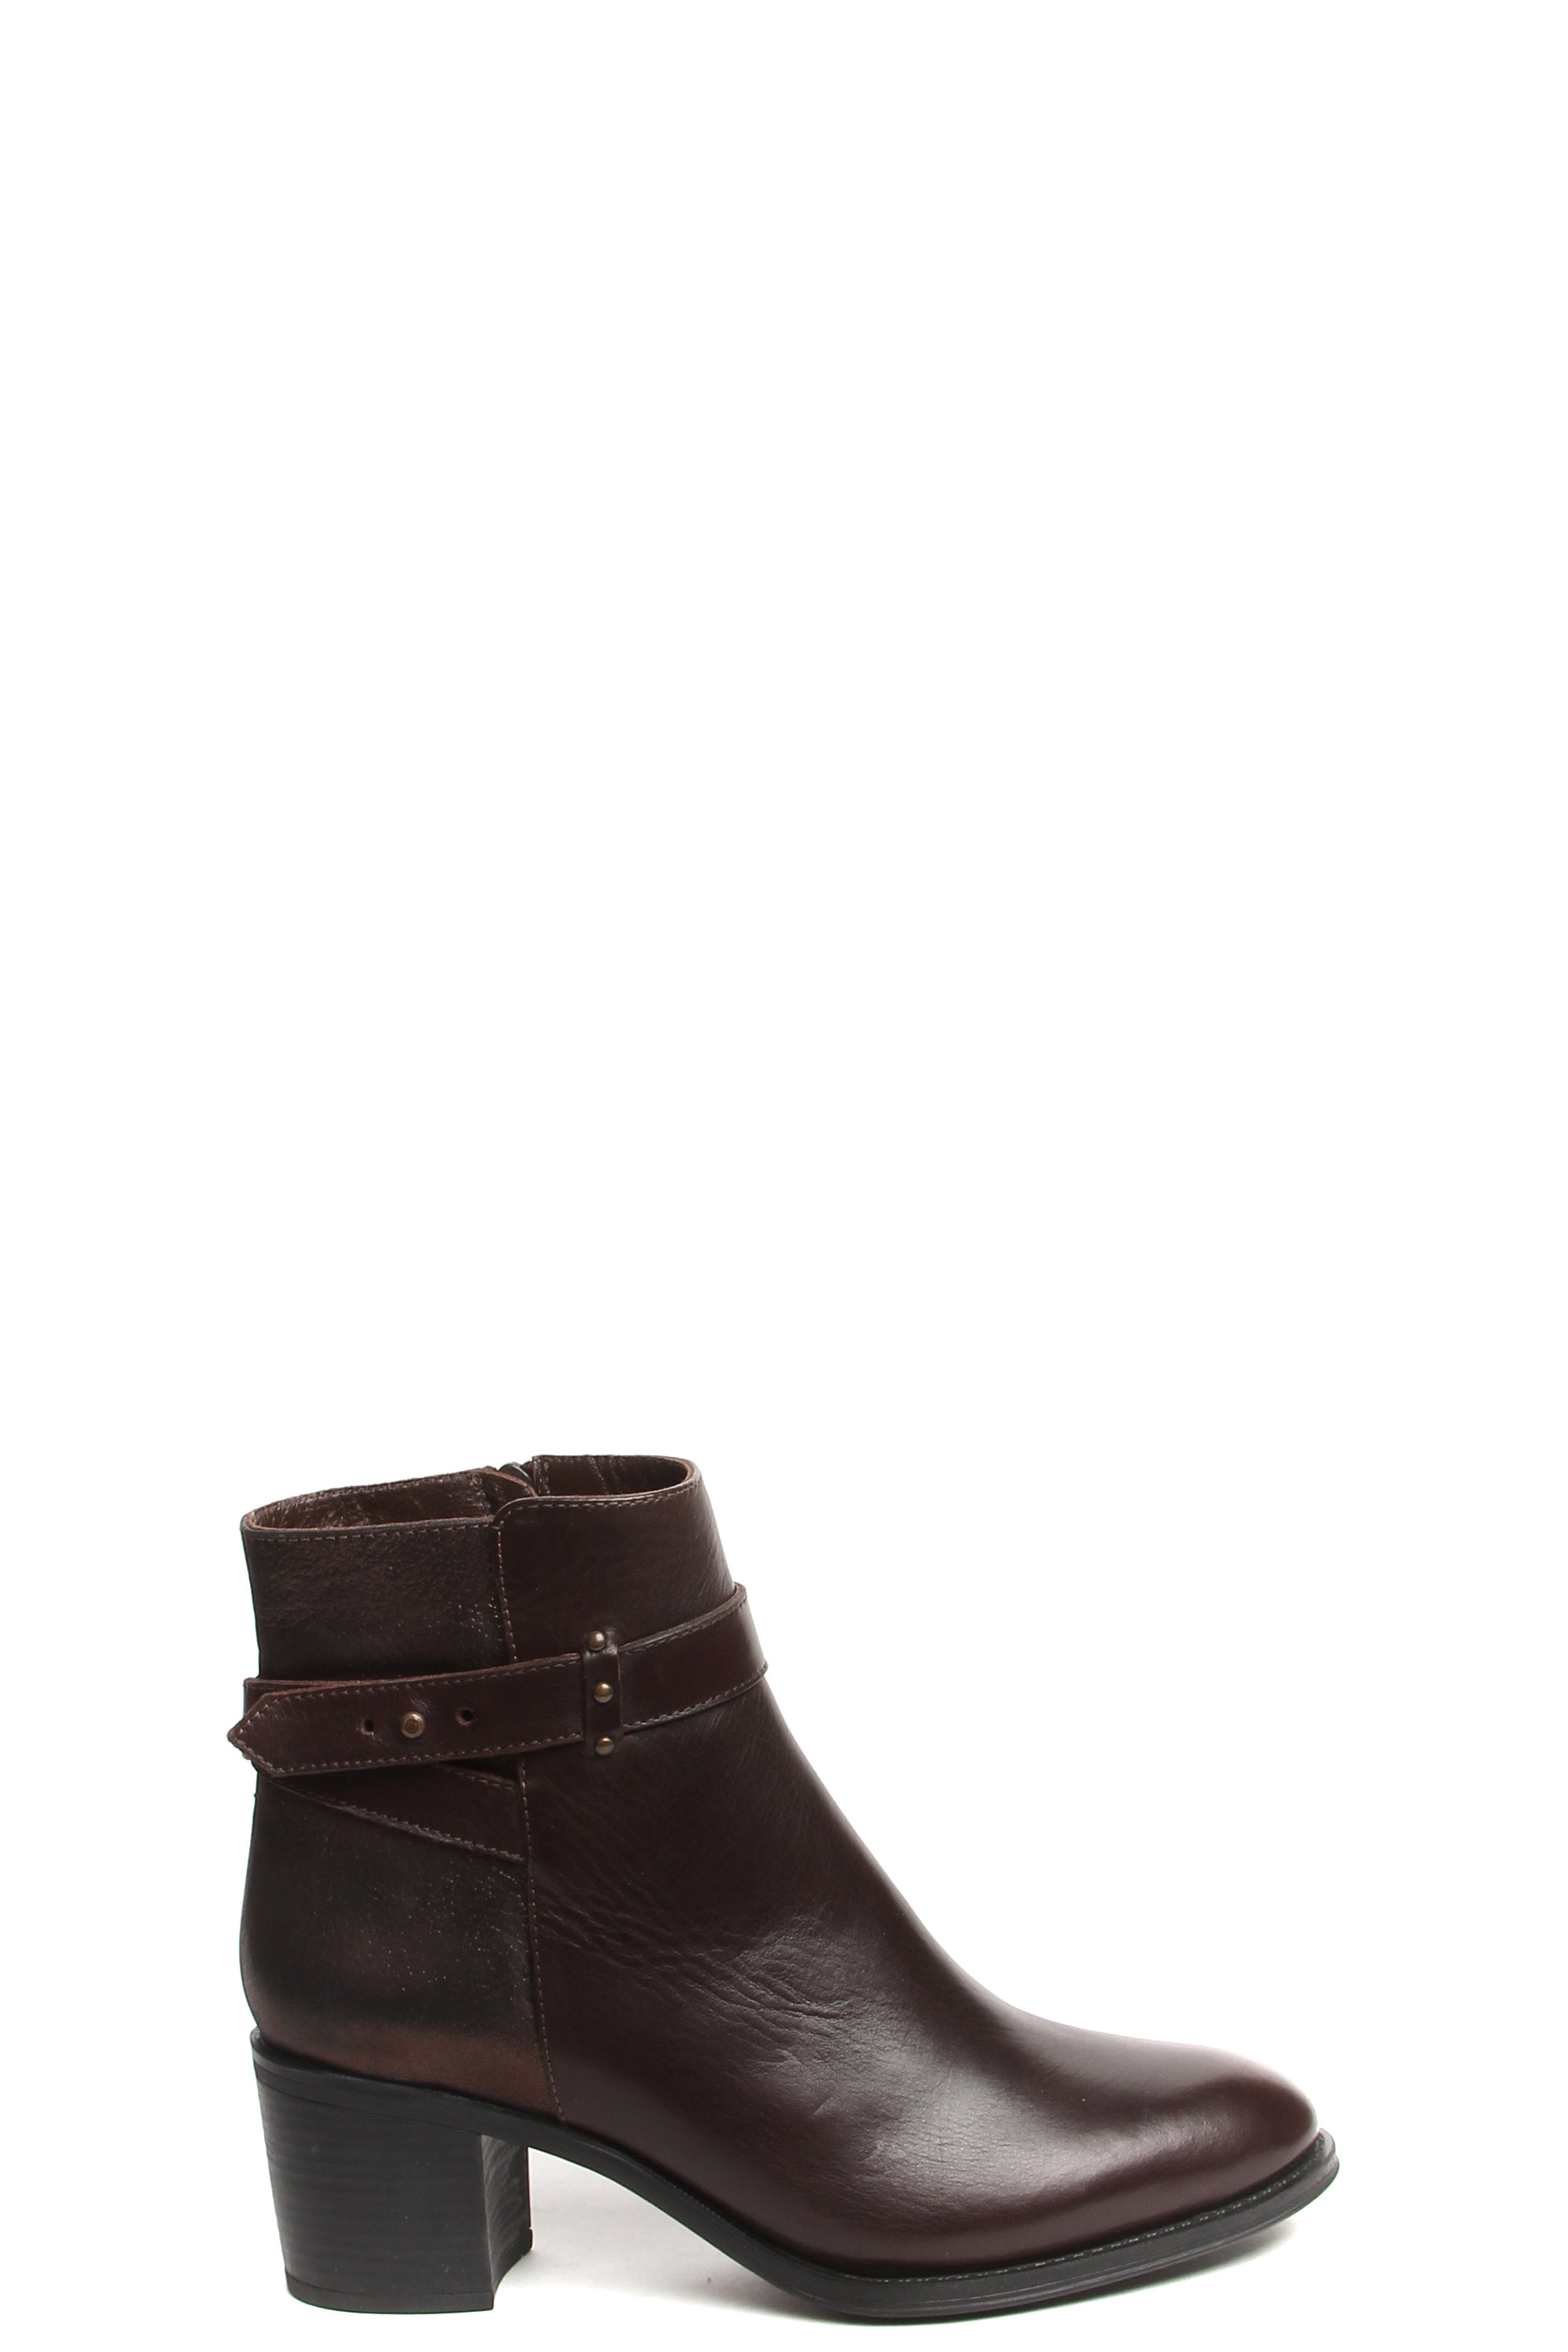 182549-1-120V ботинки  жен. дем. натуральная кожа/ворсин/термоэластопласт коричневый Milana